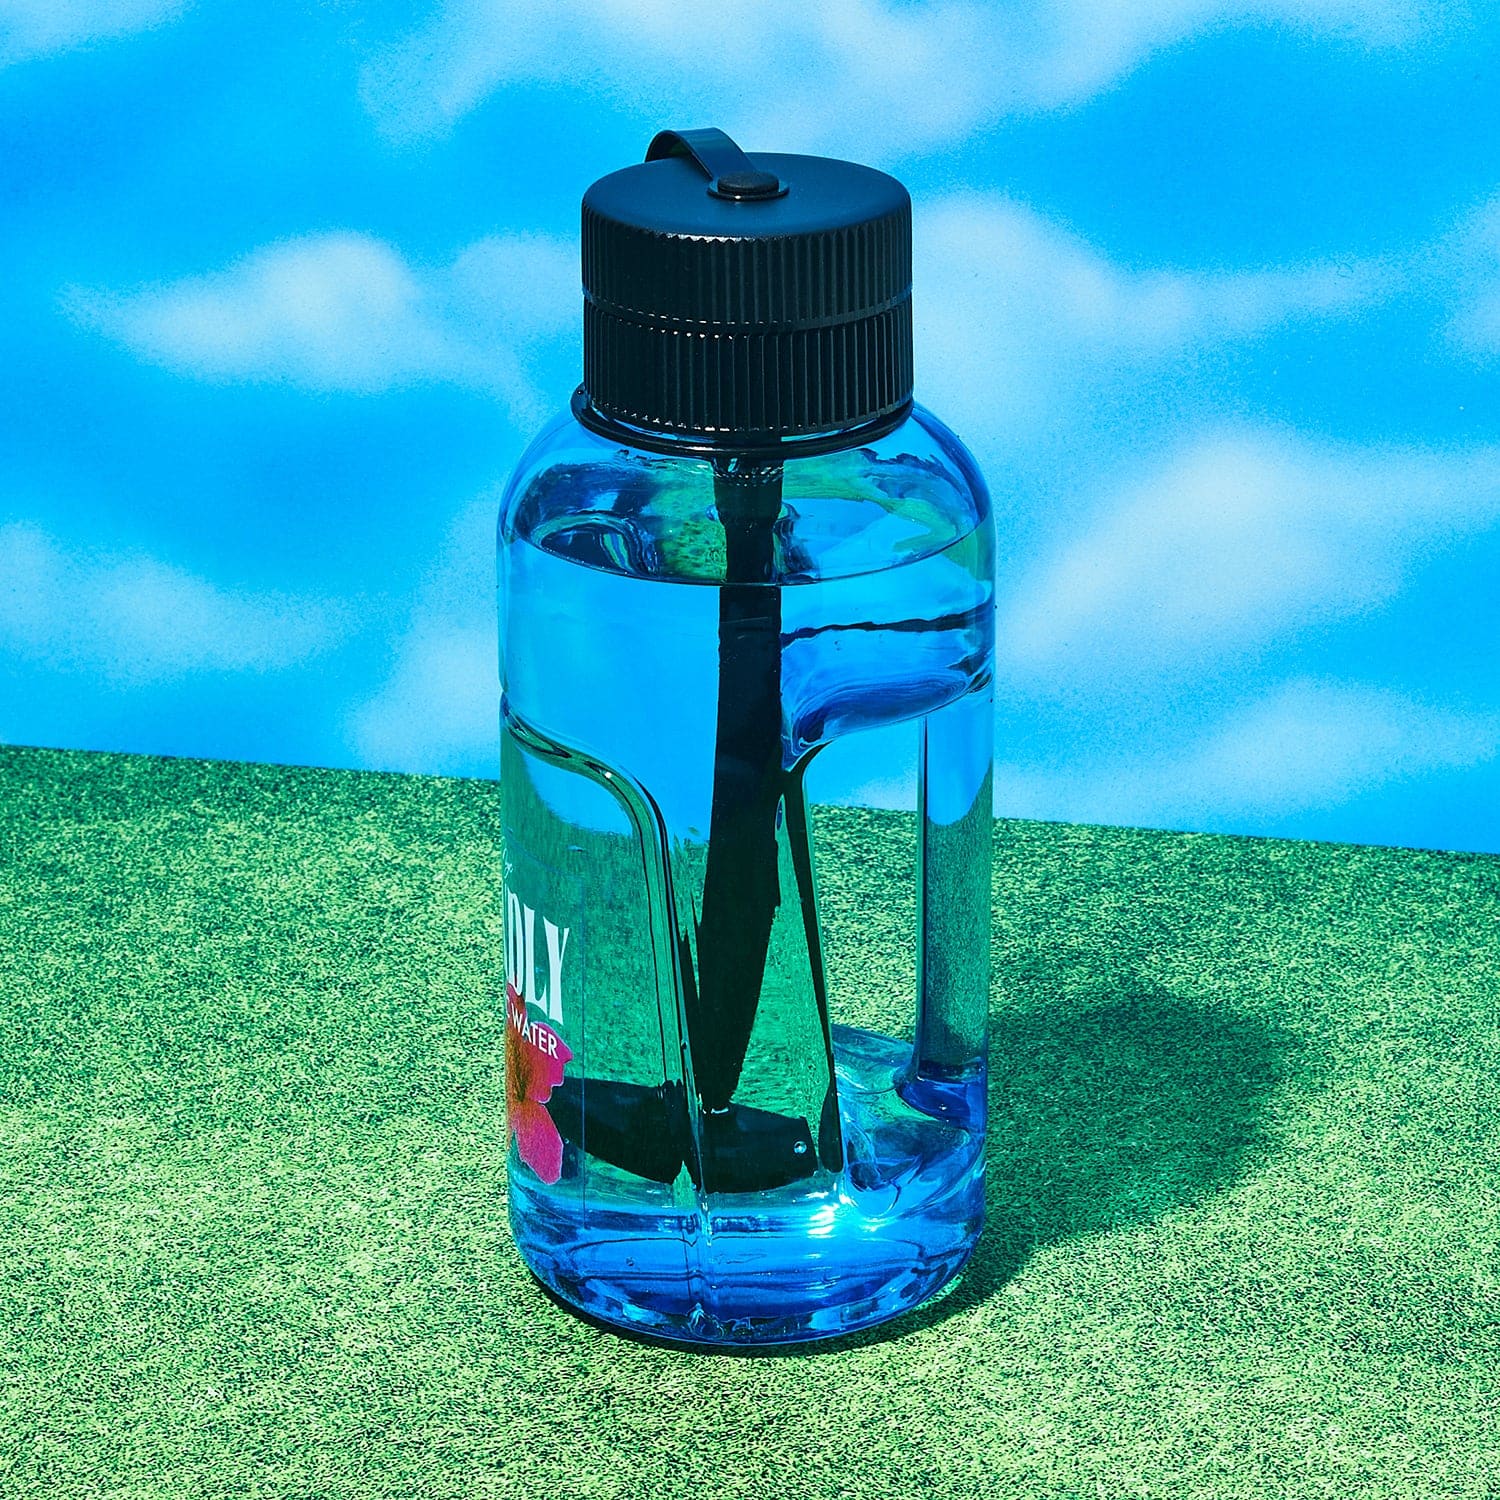 Friends Water Bottle Bong Aesthetic Bong - Exclusive - Hand